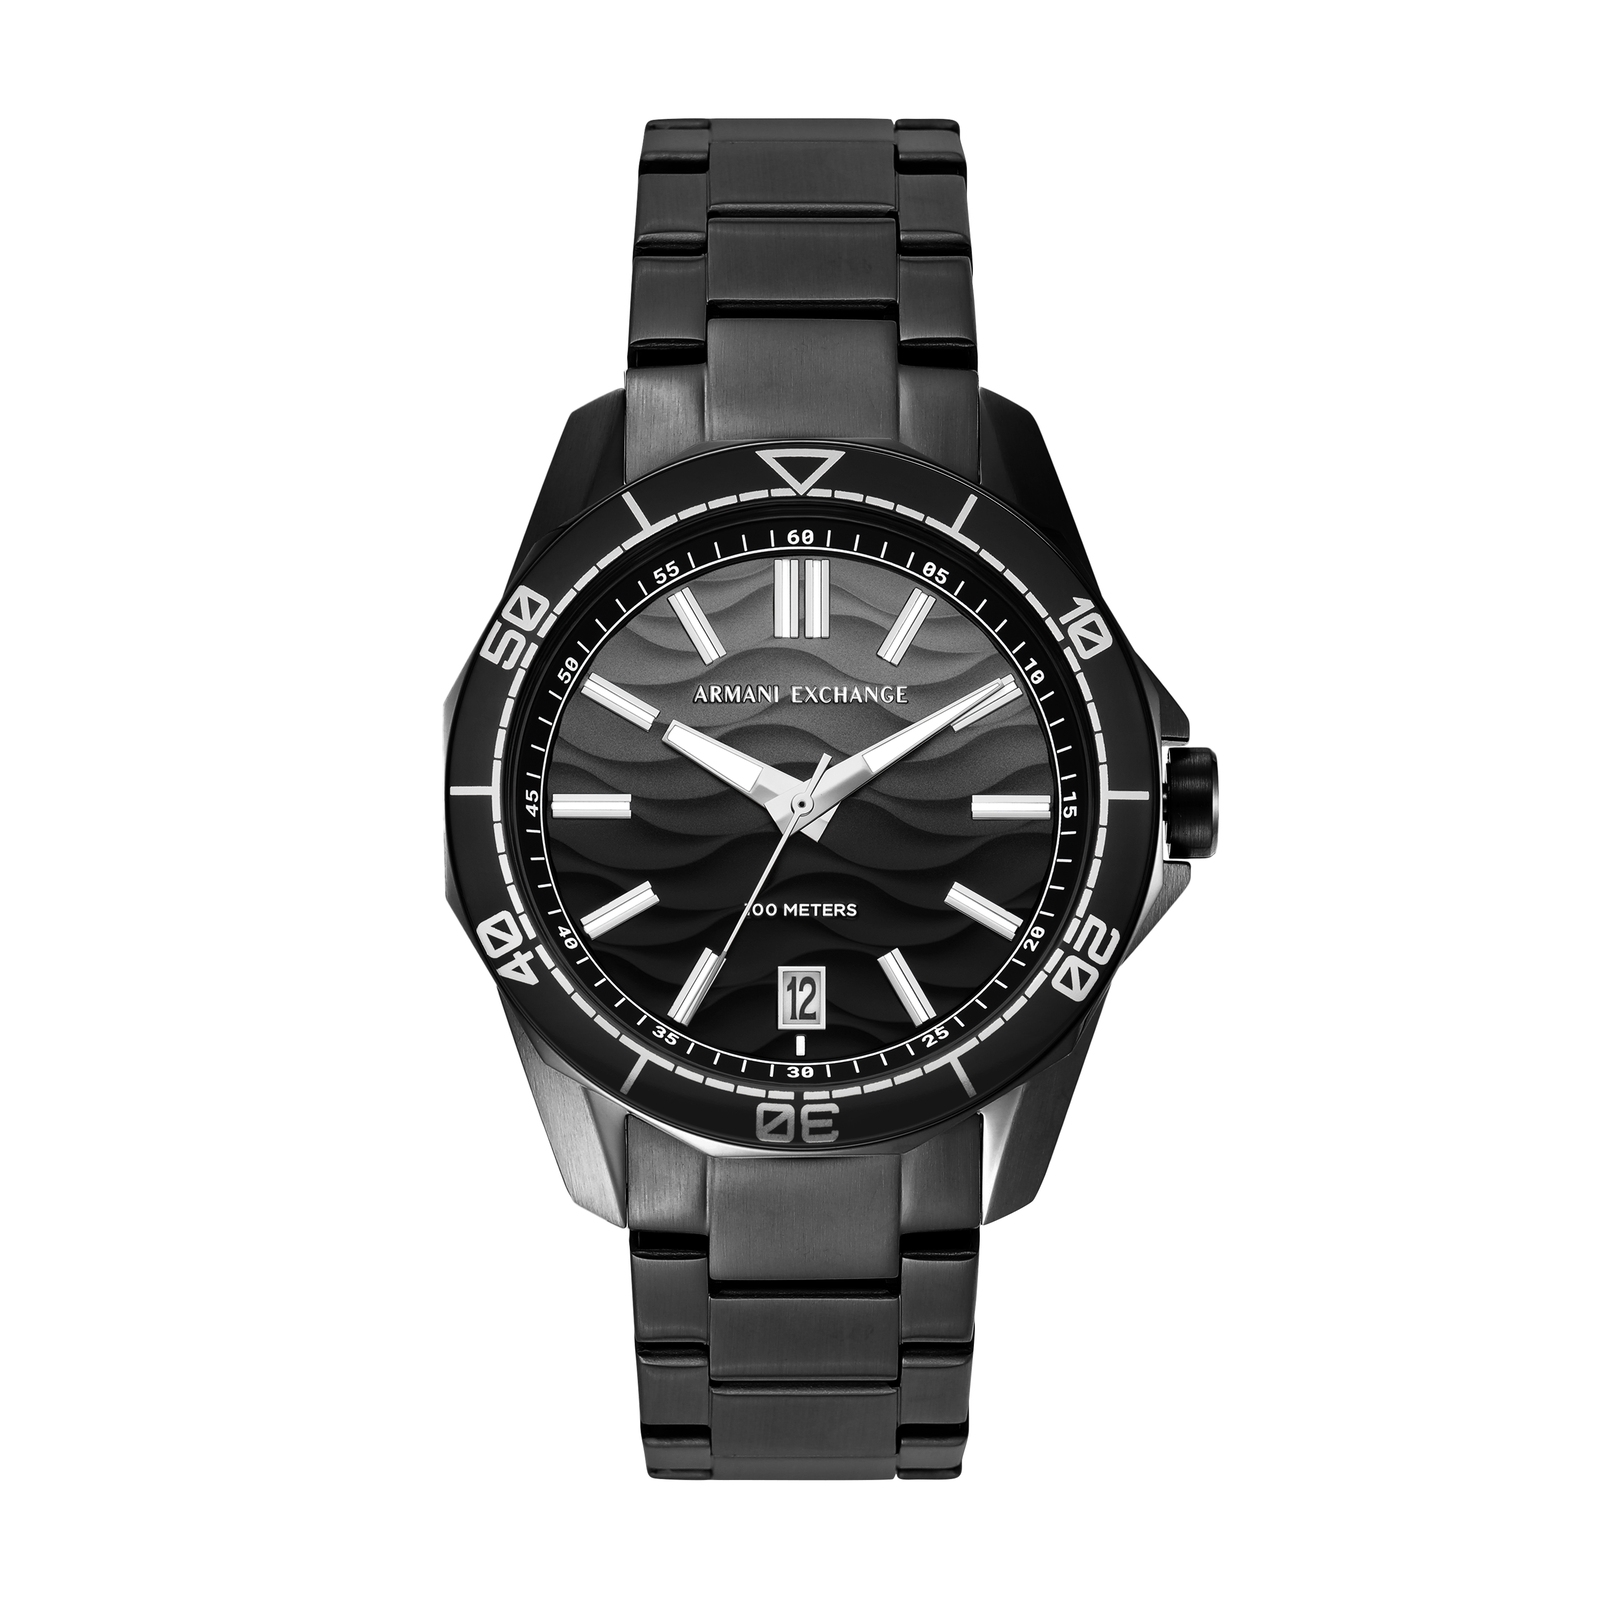 AX ARMANI EXCHANGE Mens Outerbanks Analog-Quartz Watch with Silicone Strap,  Black, 21 (Model: AX7105)